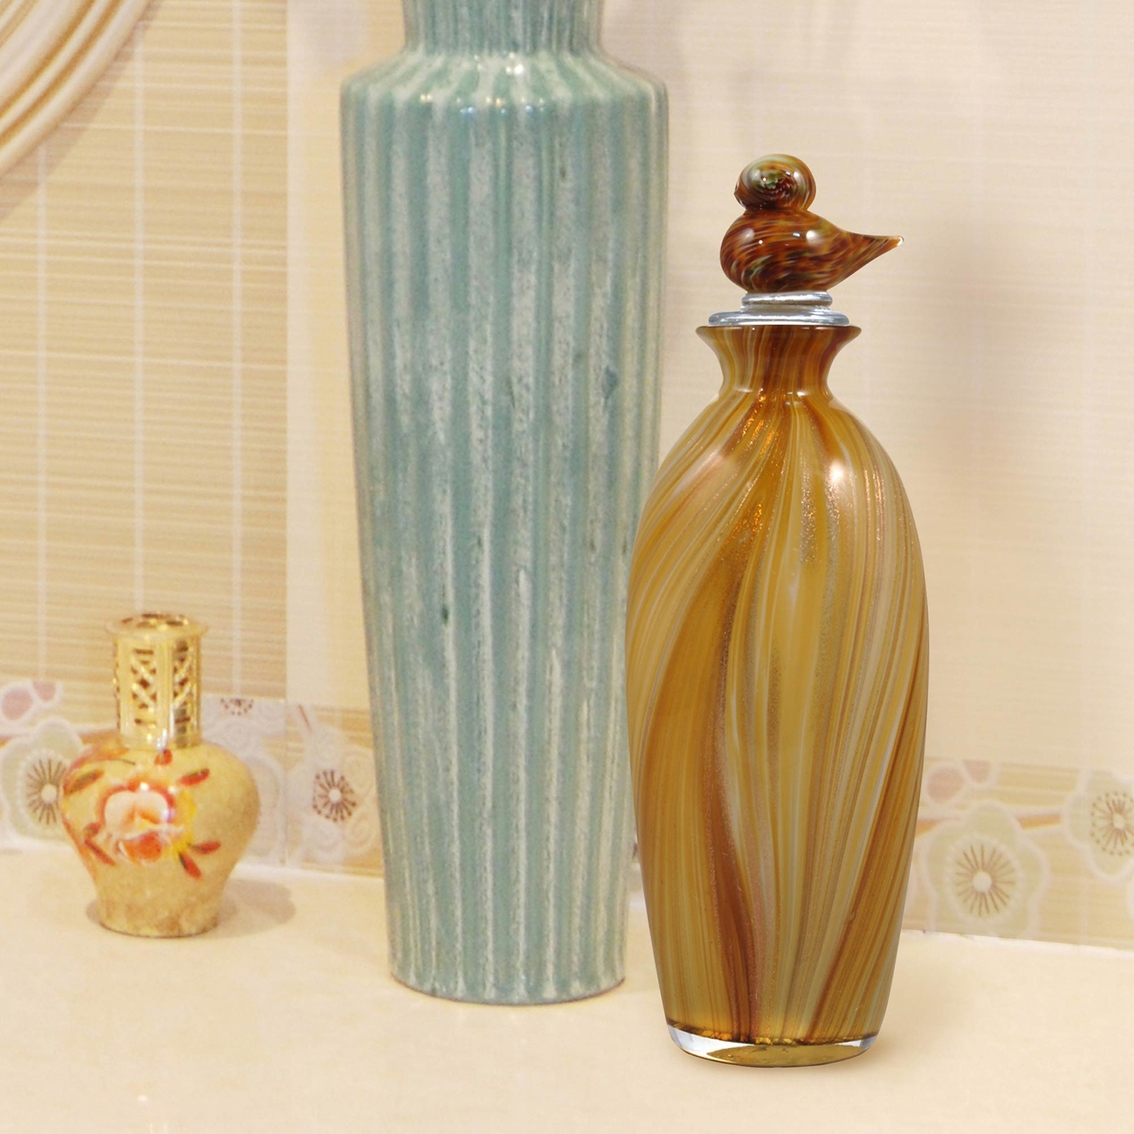 Dale Tiffany Wheat Tall Vase - Image 2 of 2